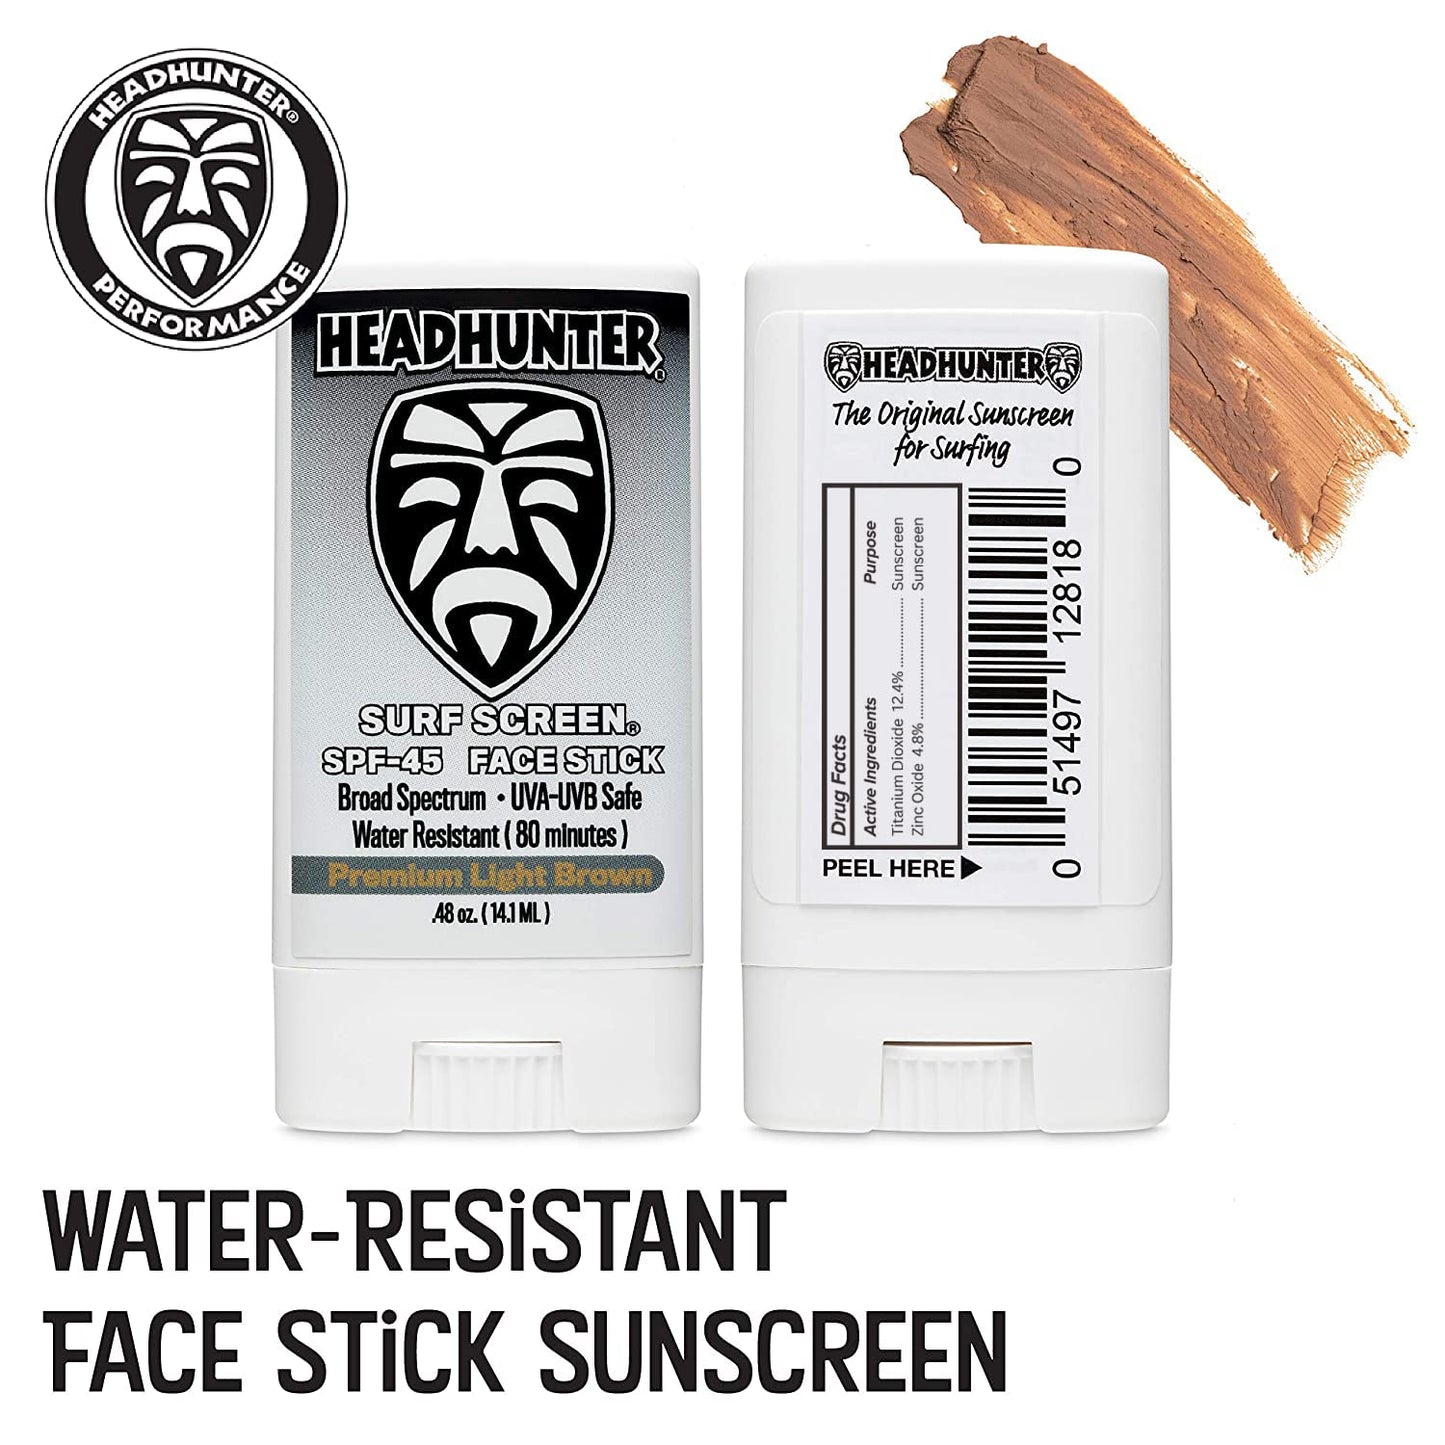 SPF 45 Mineral Sunscreen Face Stick - 3 Pack "Light Brown"